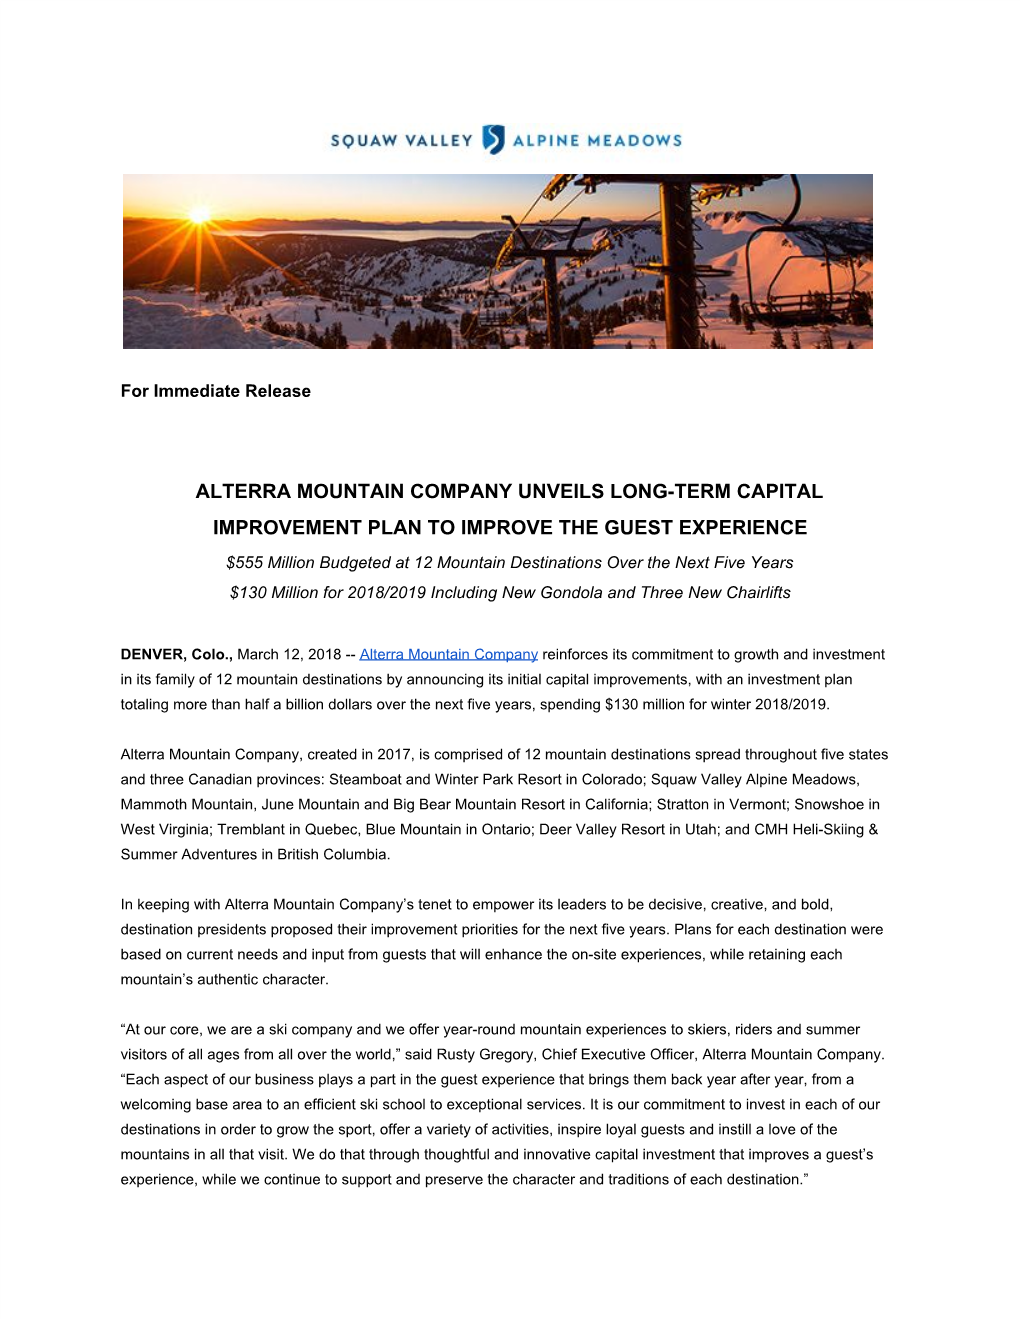 Alterra Mountain Company Unveils Long-Term Capital Improvement